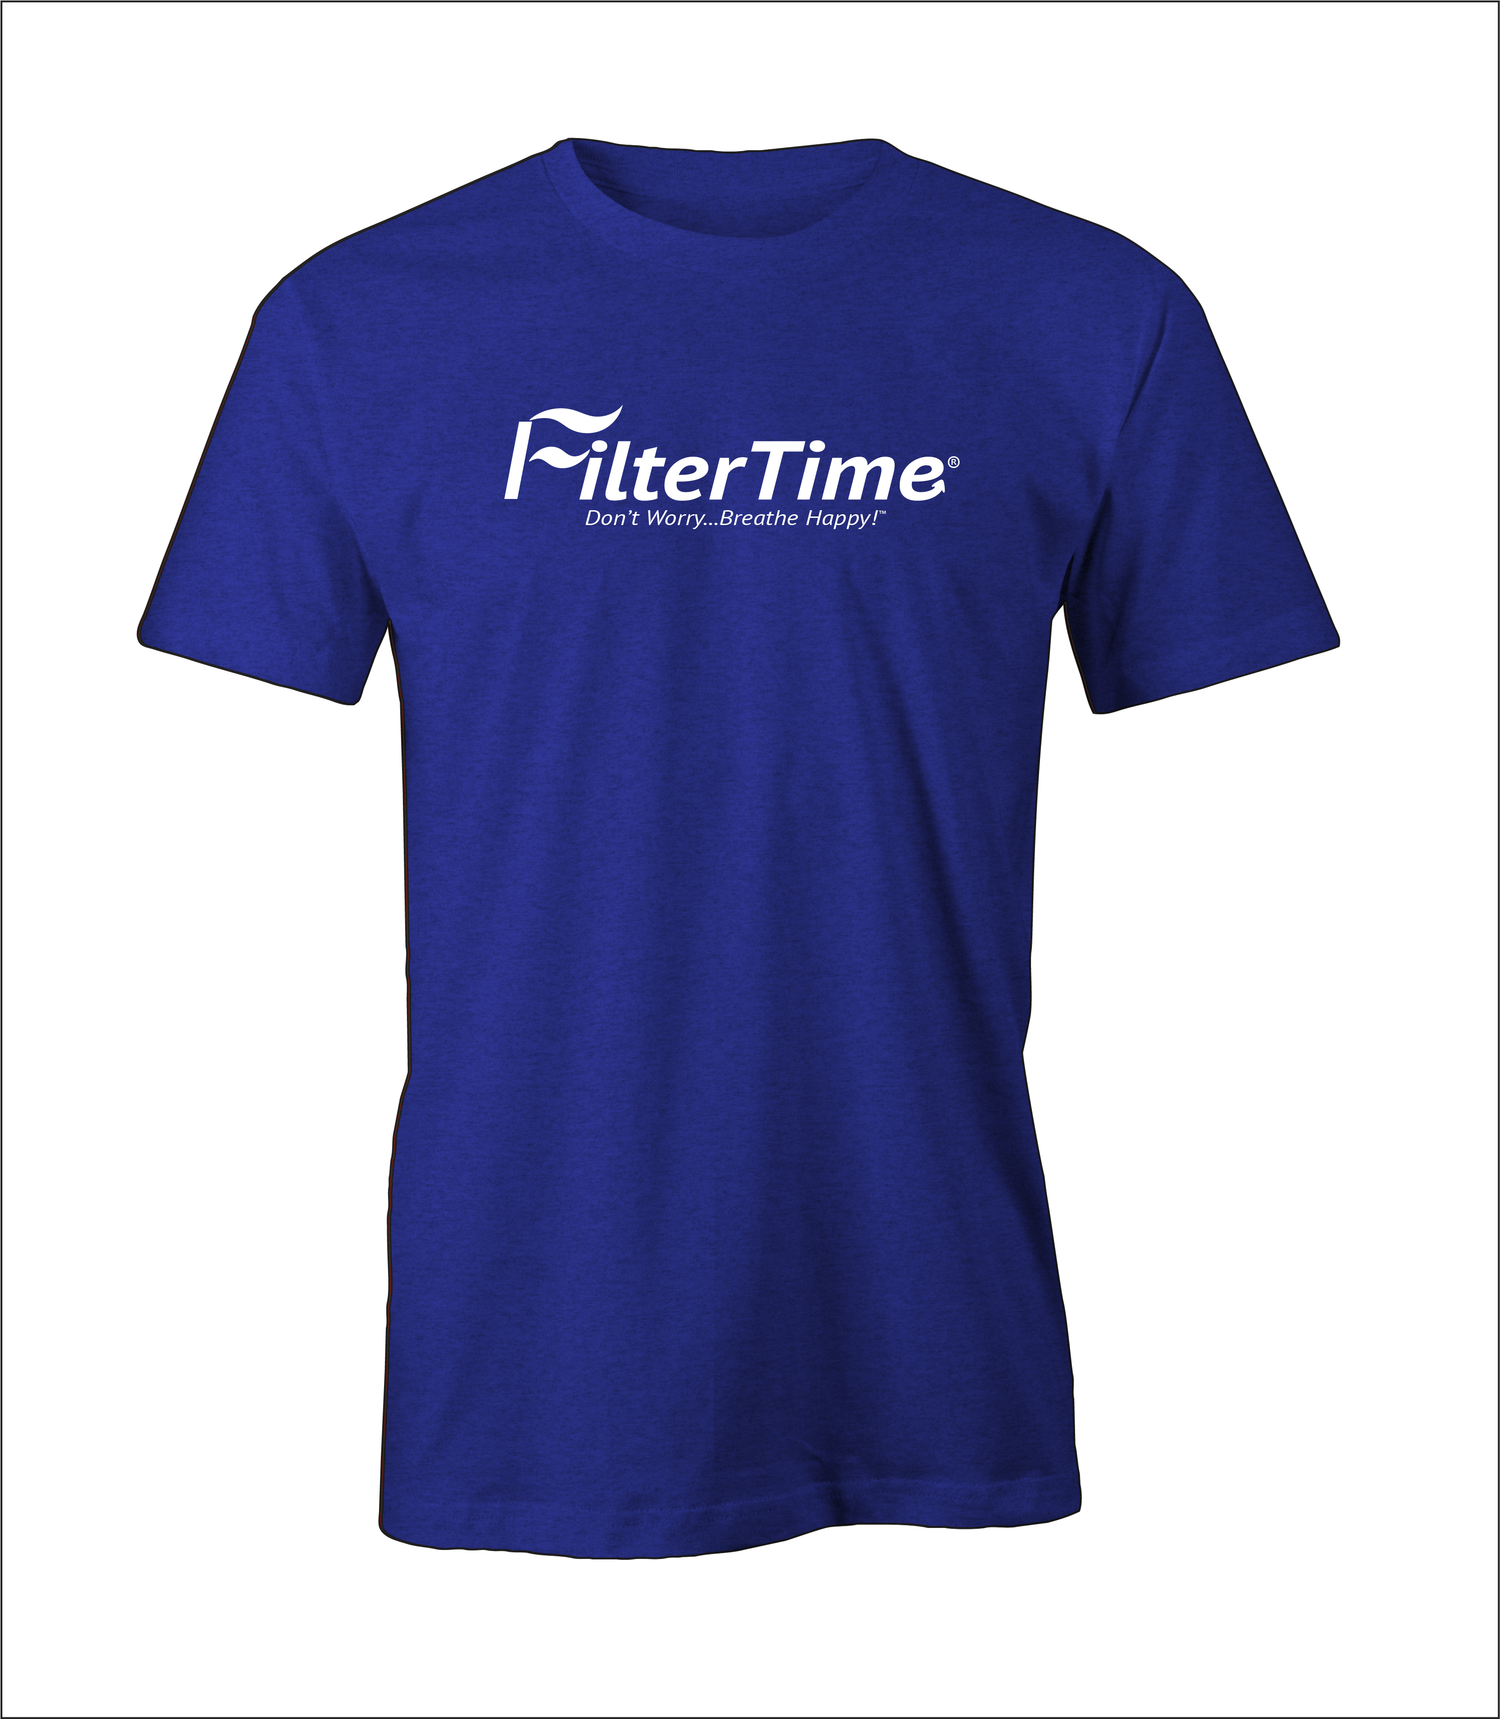 FilterTime Shirts